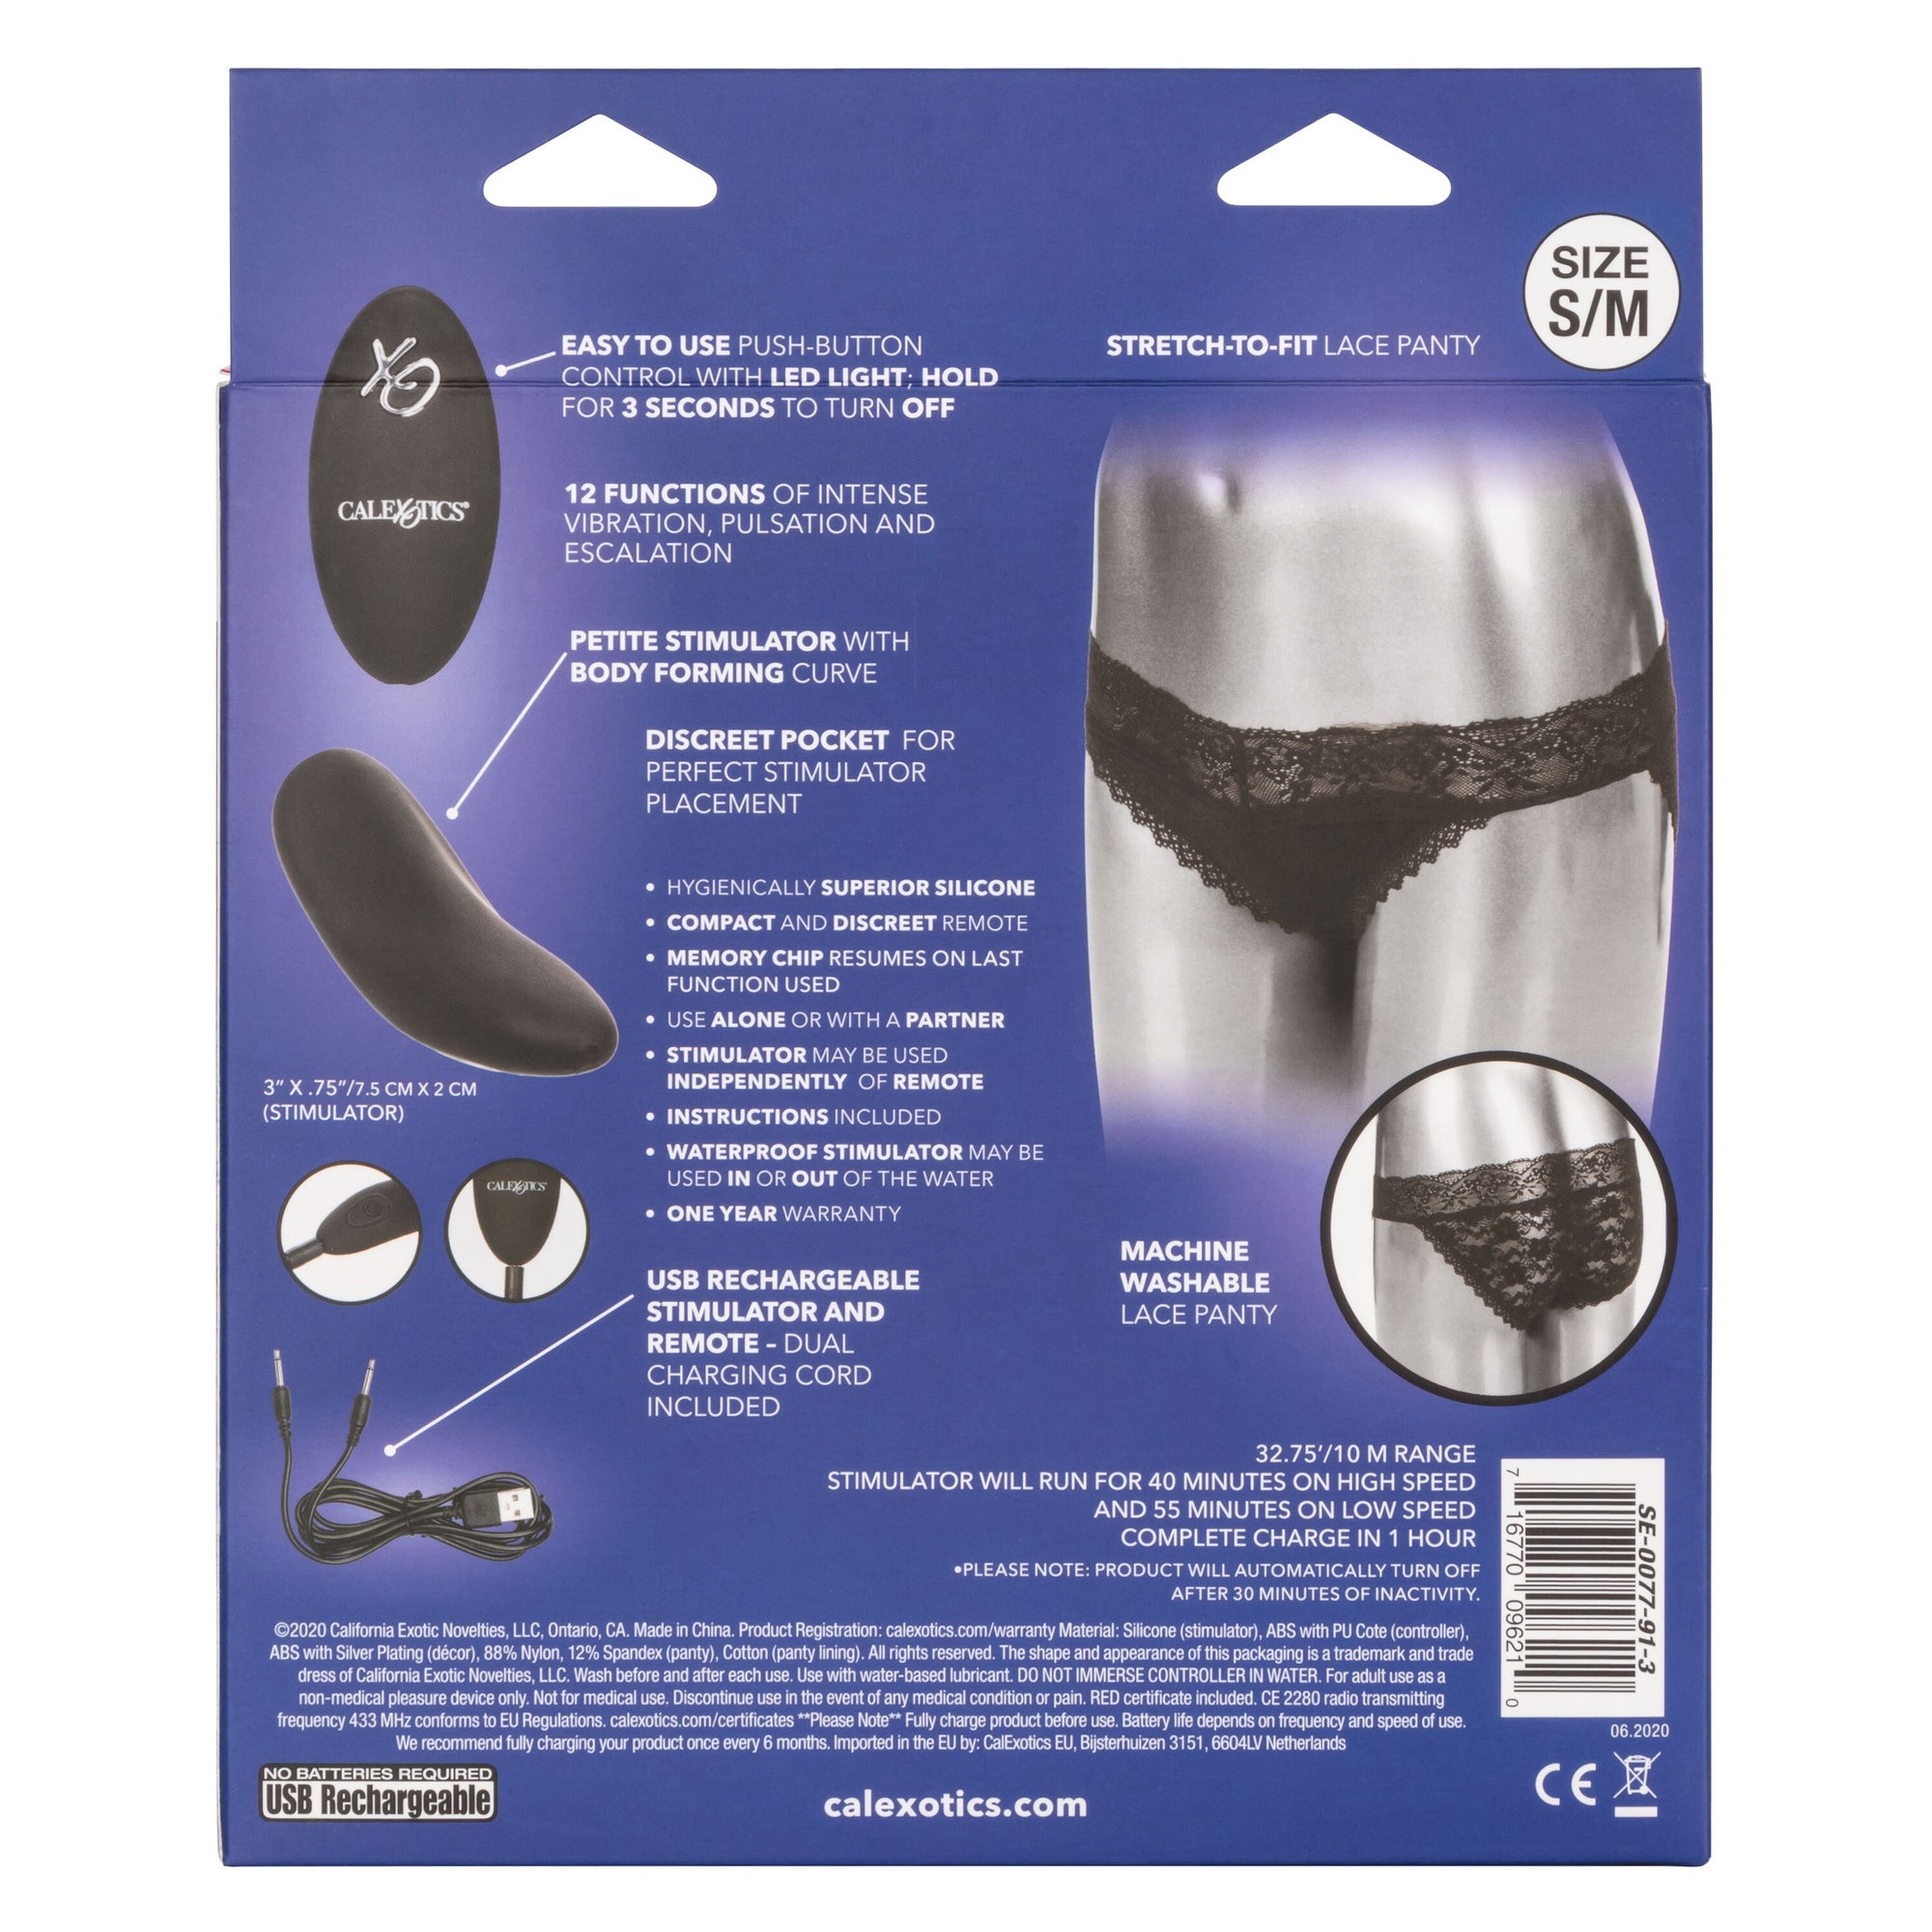 Remote Control Lace Panty Set - S/m discreet vibrators, hot sellers
Panty Vibes
CalExotics Cupid’s Secret Stash